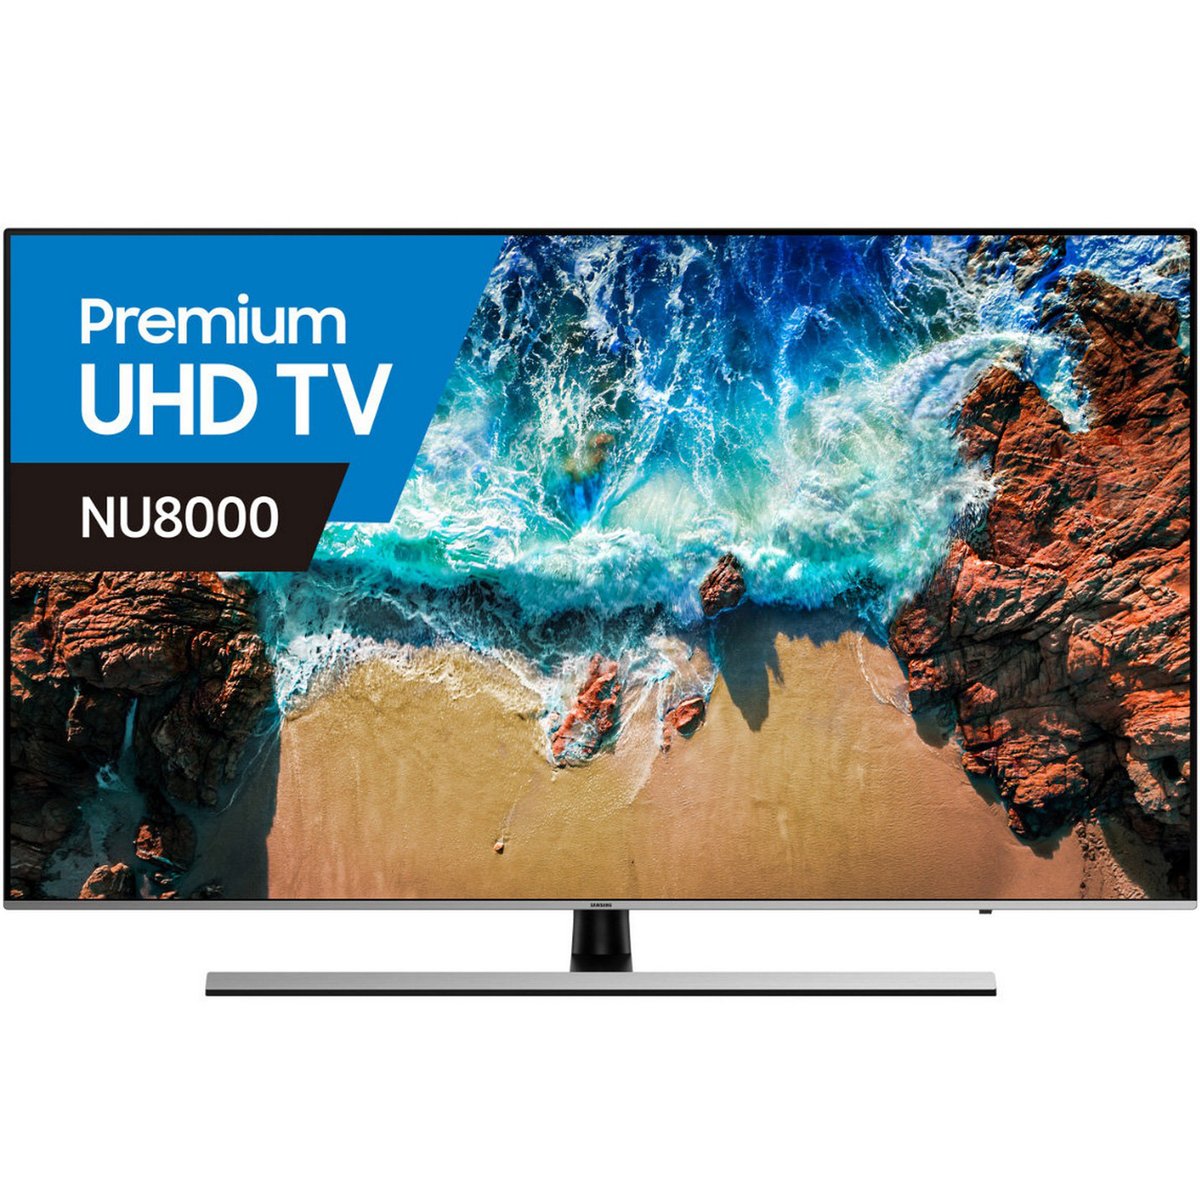 Samsung Premium Ultra HD 4K Smart LED TV UA55NU8000 55inch